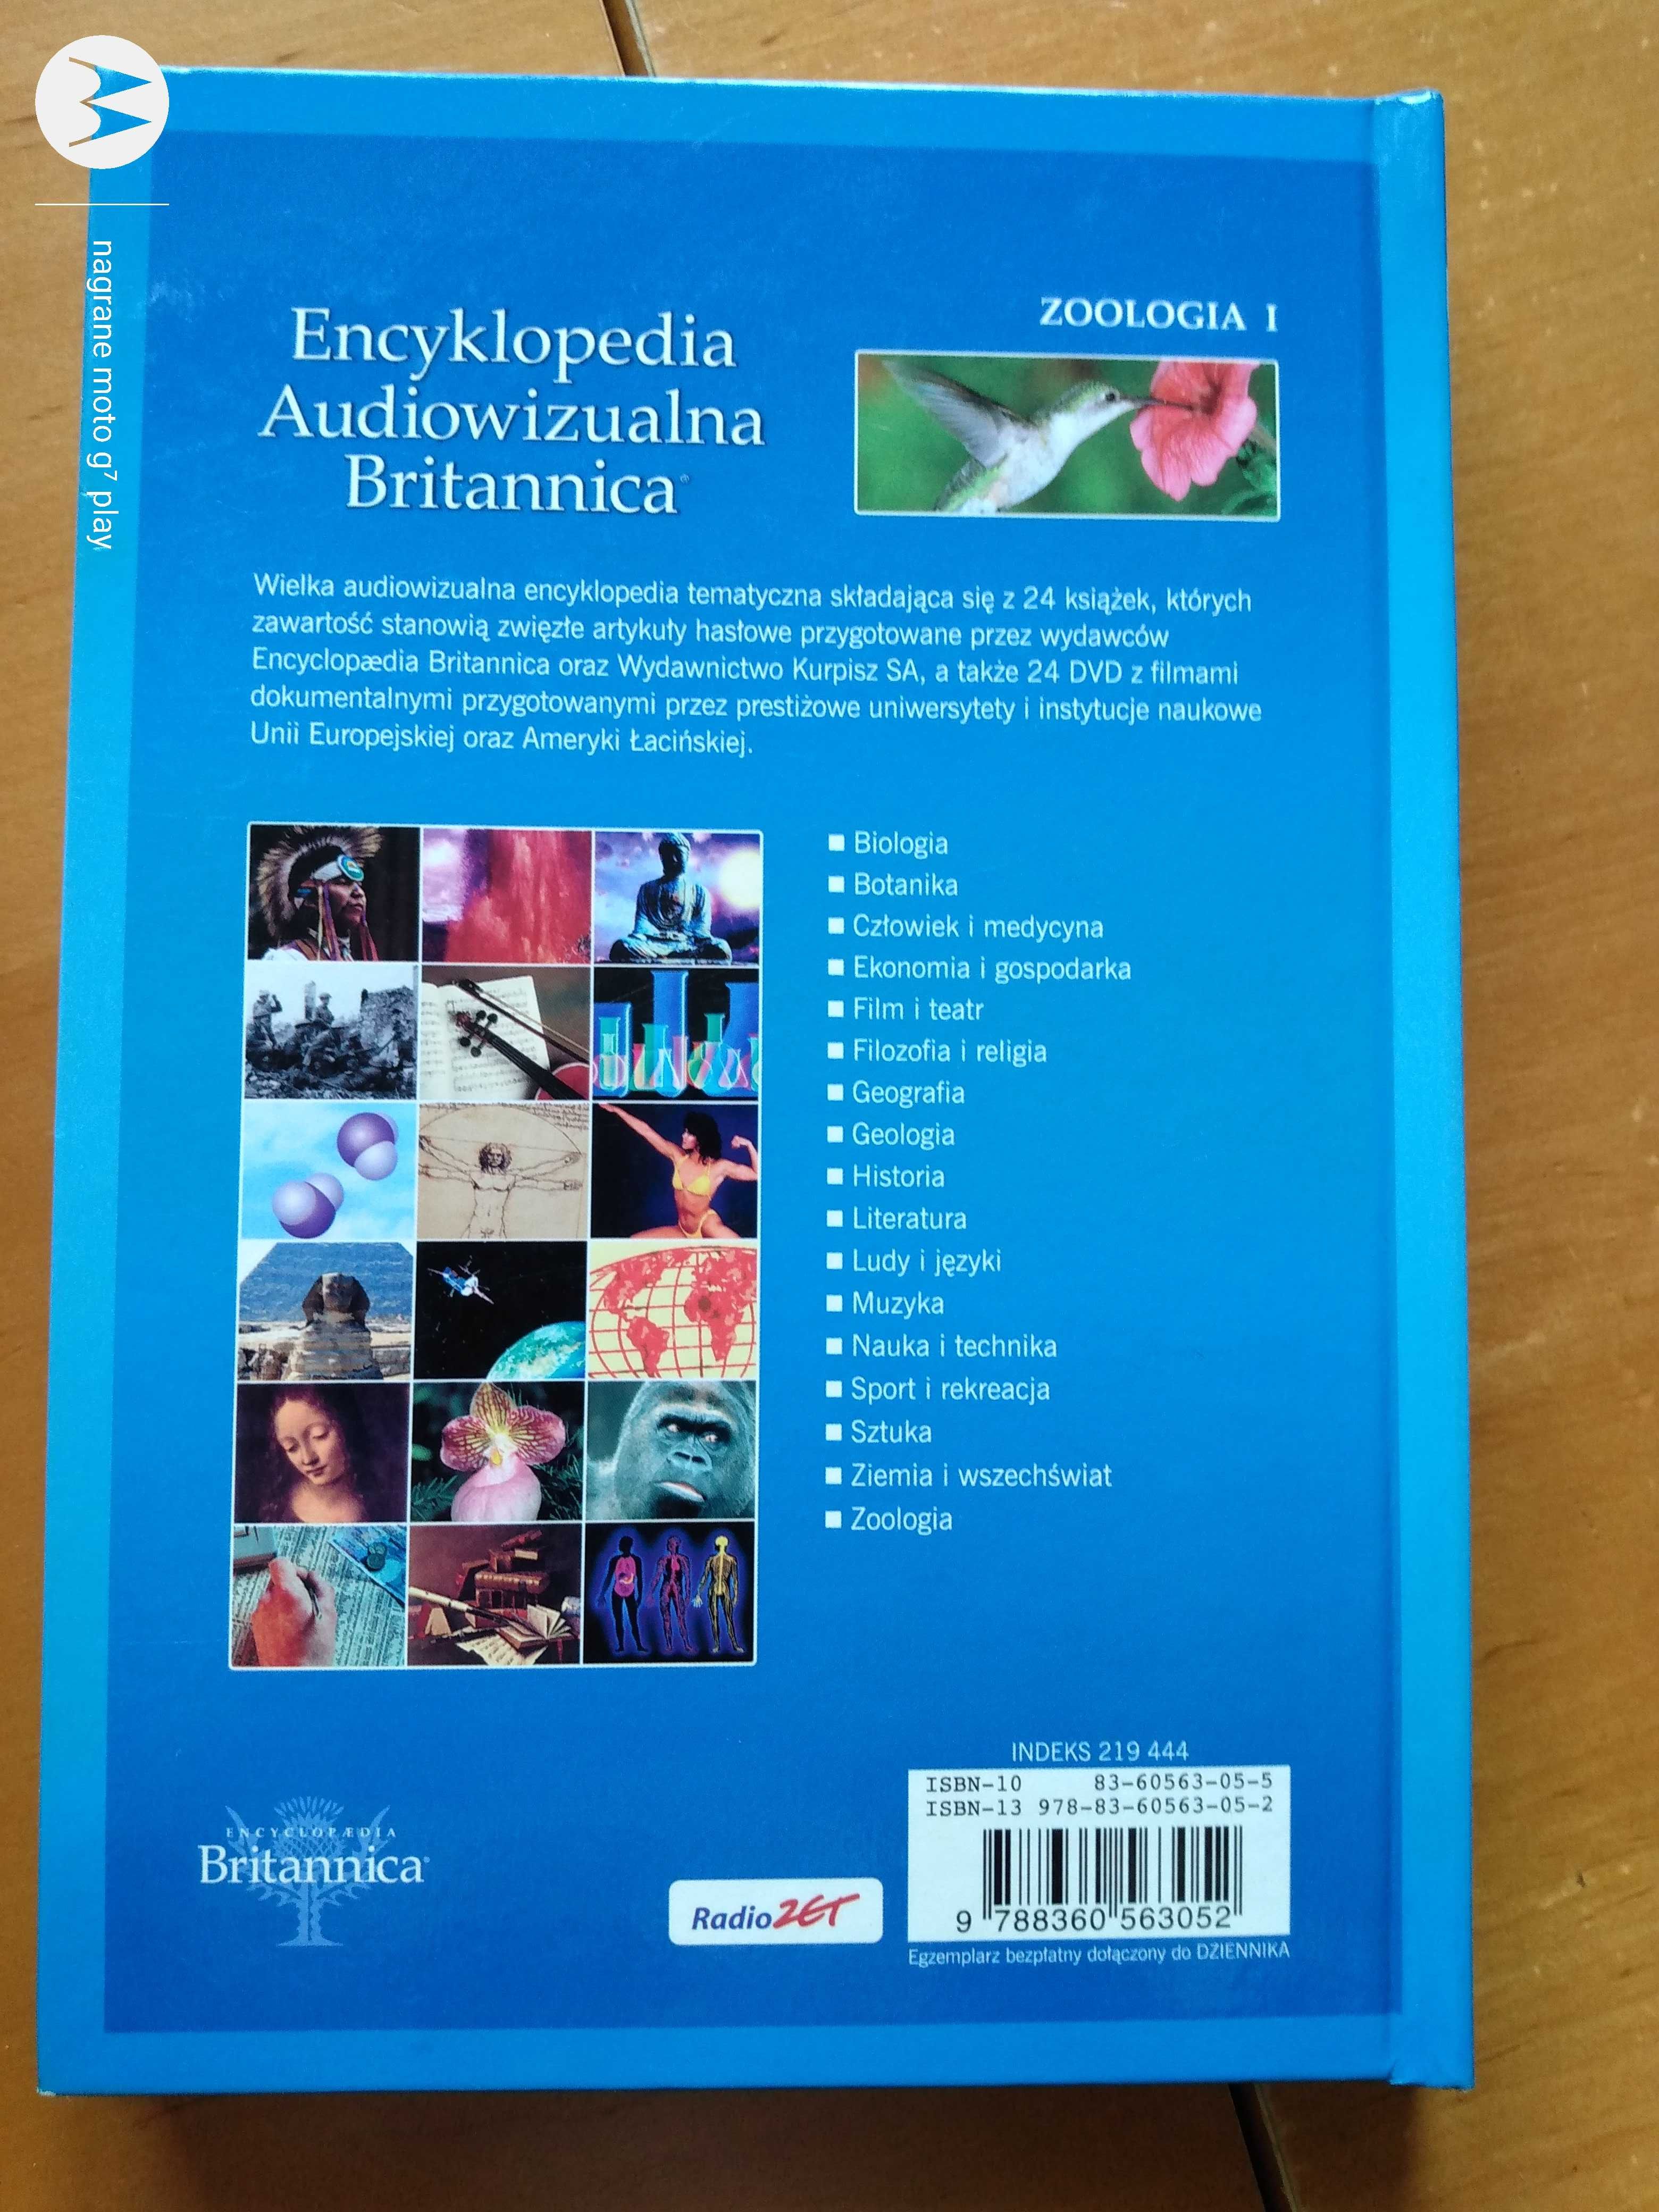 Encyklopedia Audiowizualna Britannica zoologia I